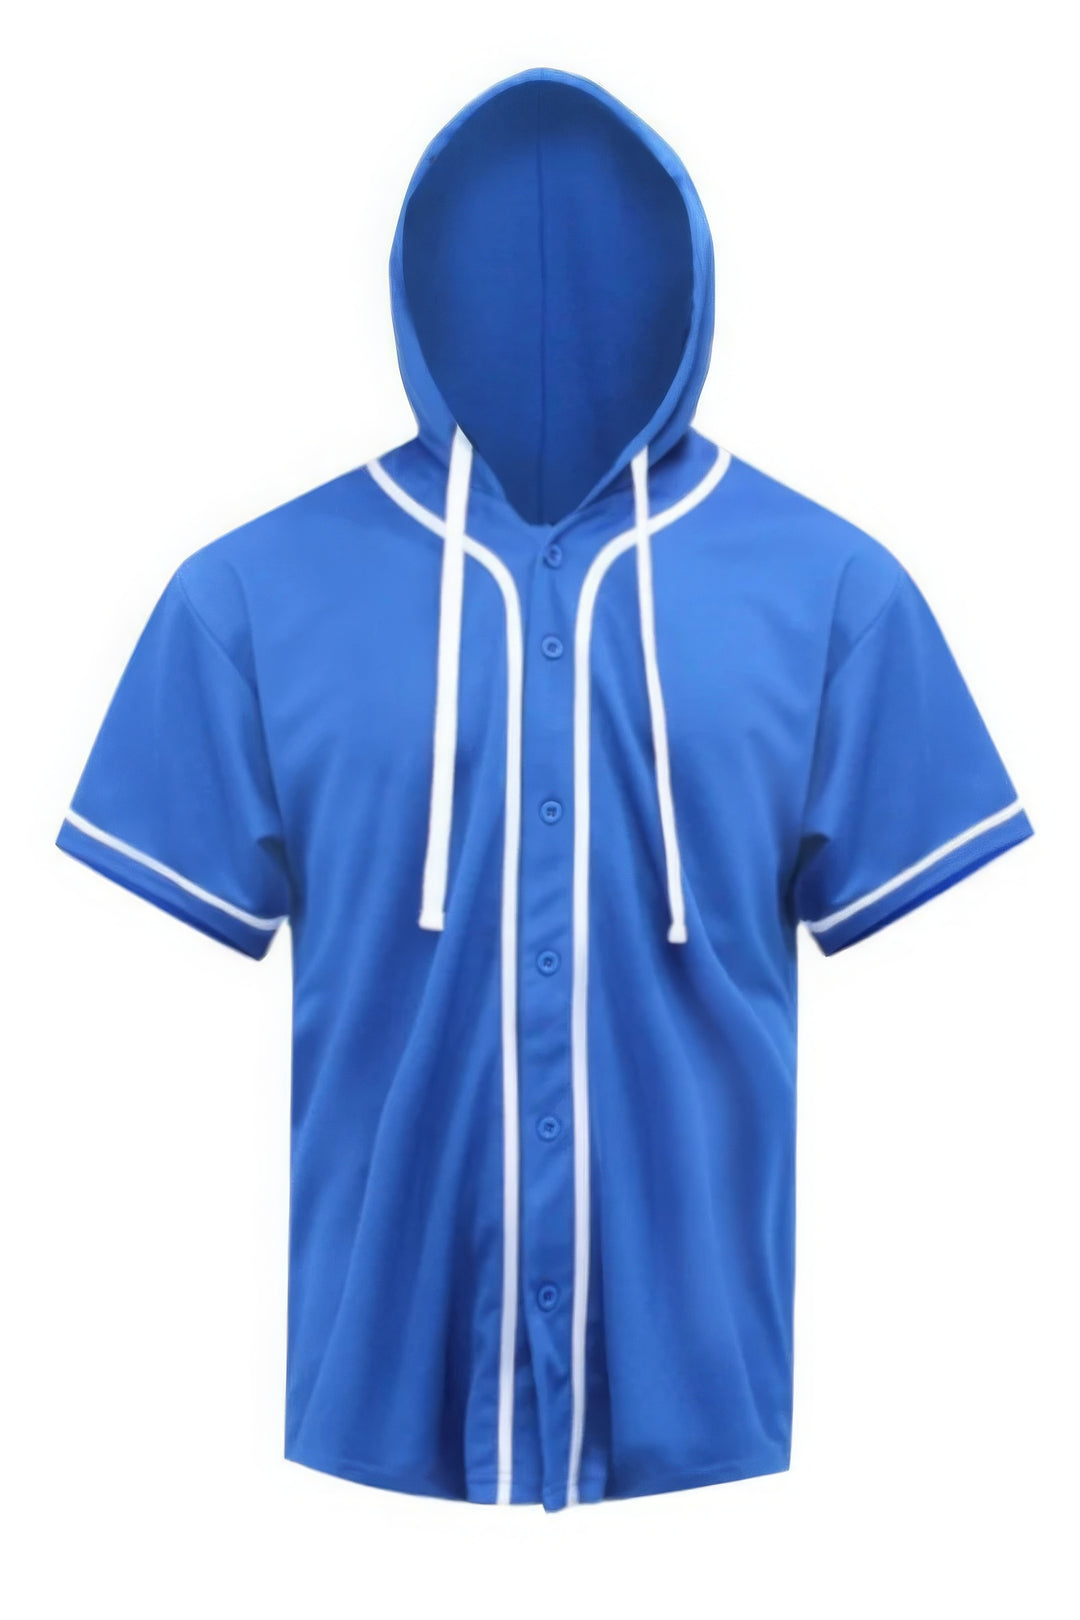 Hooded Baseball Jersey - bertofonsi